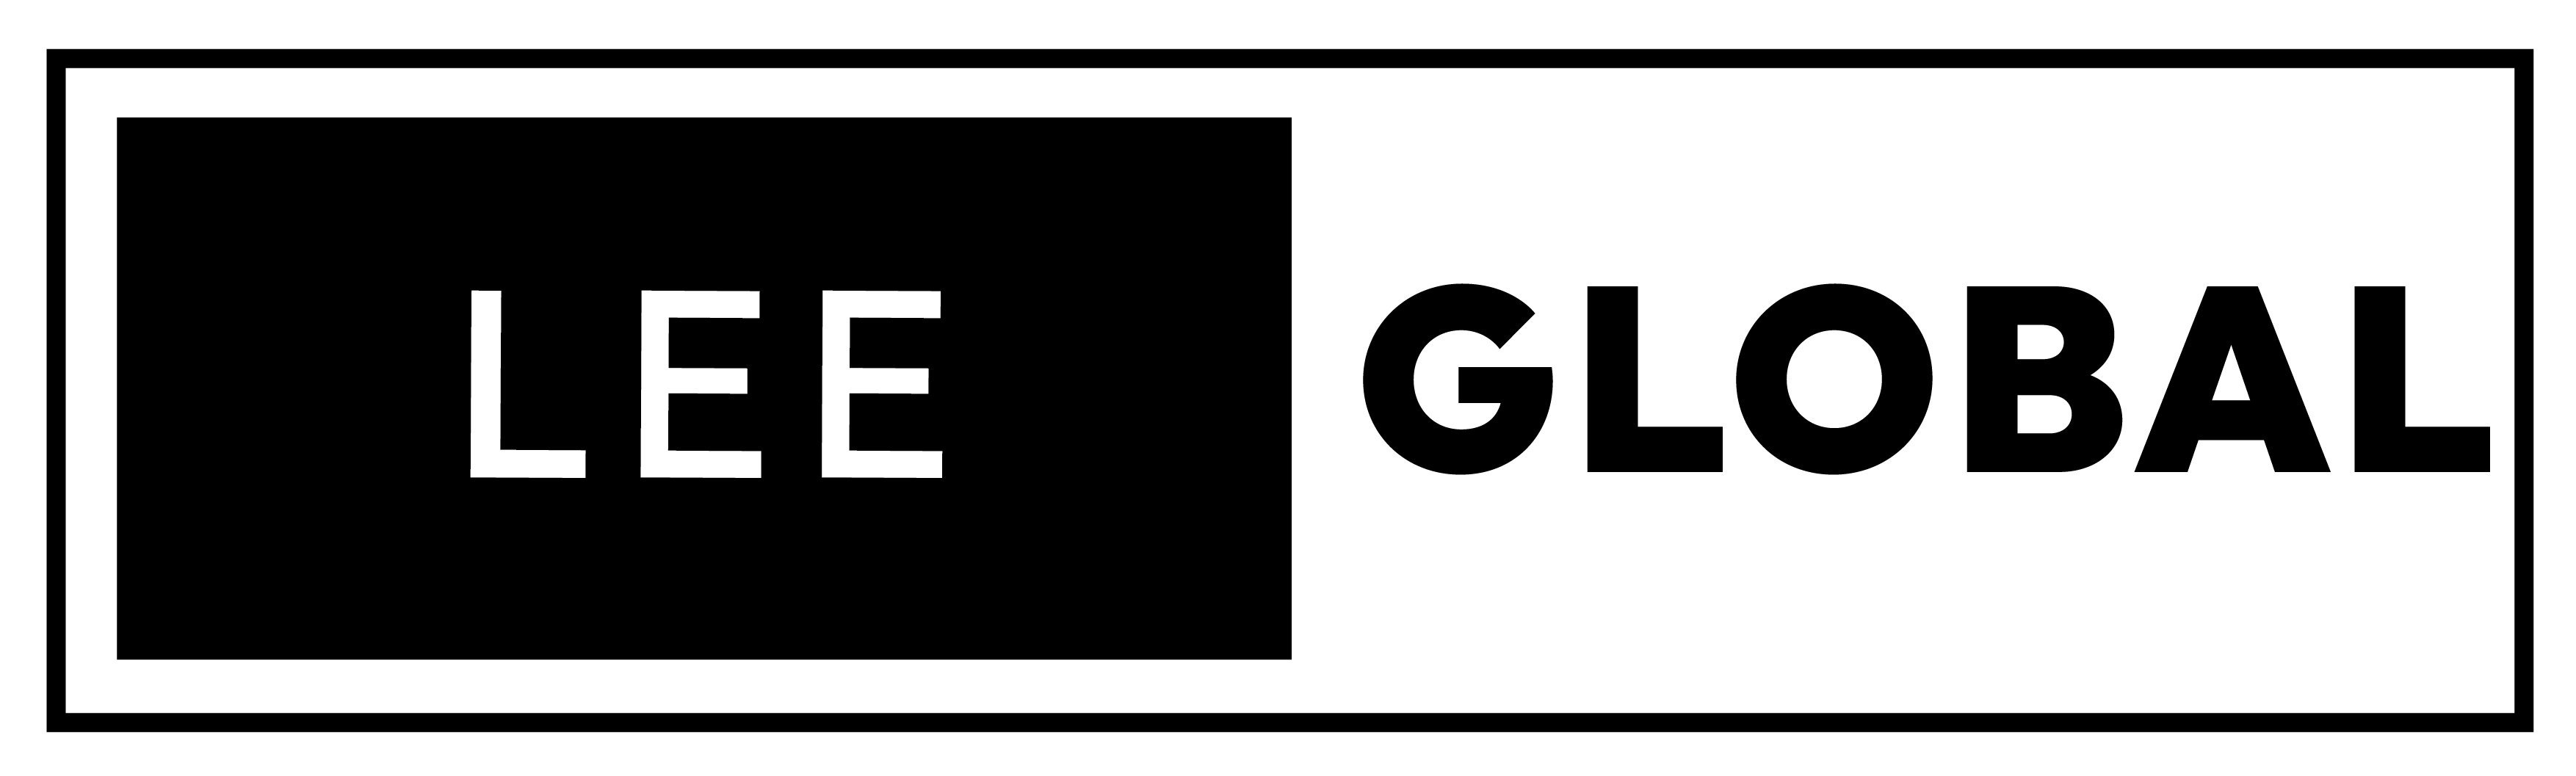 Lee Global (logo)